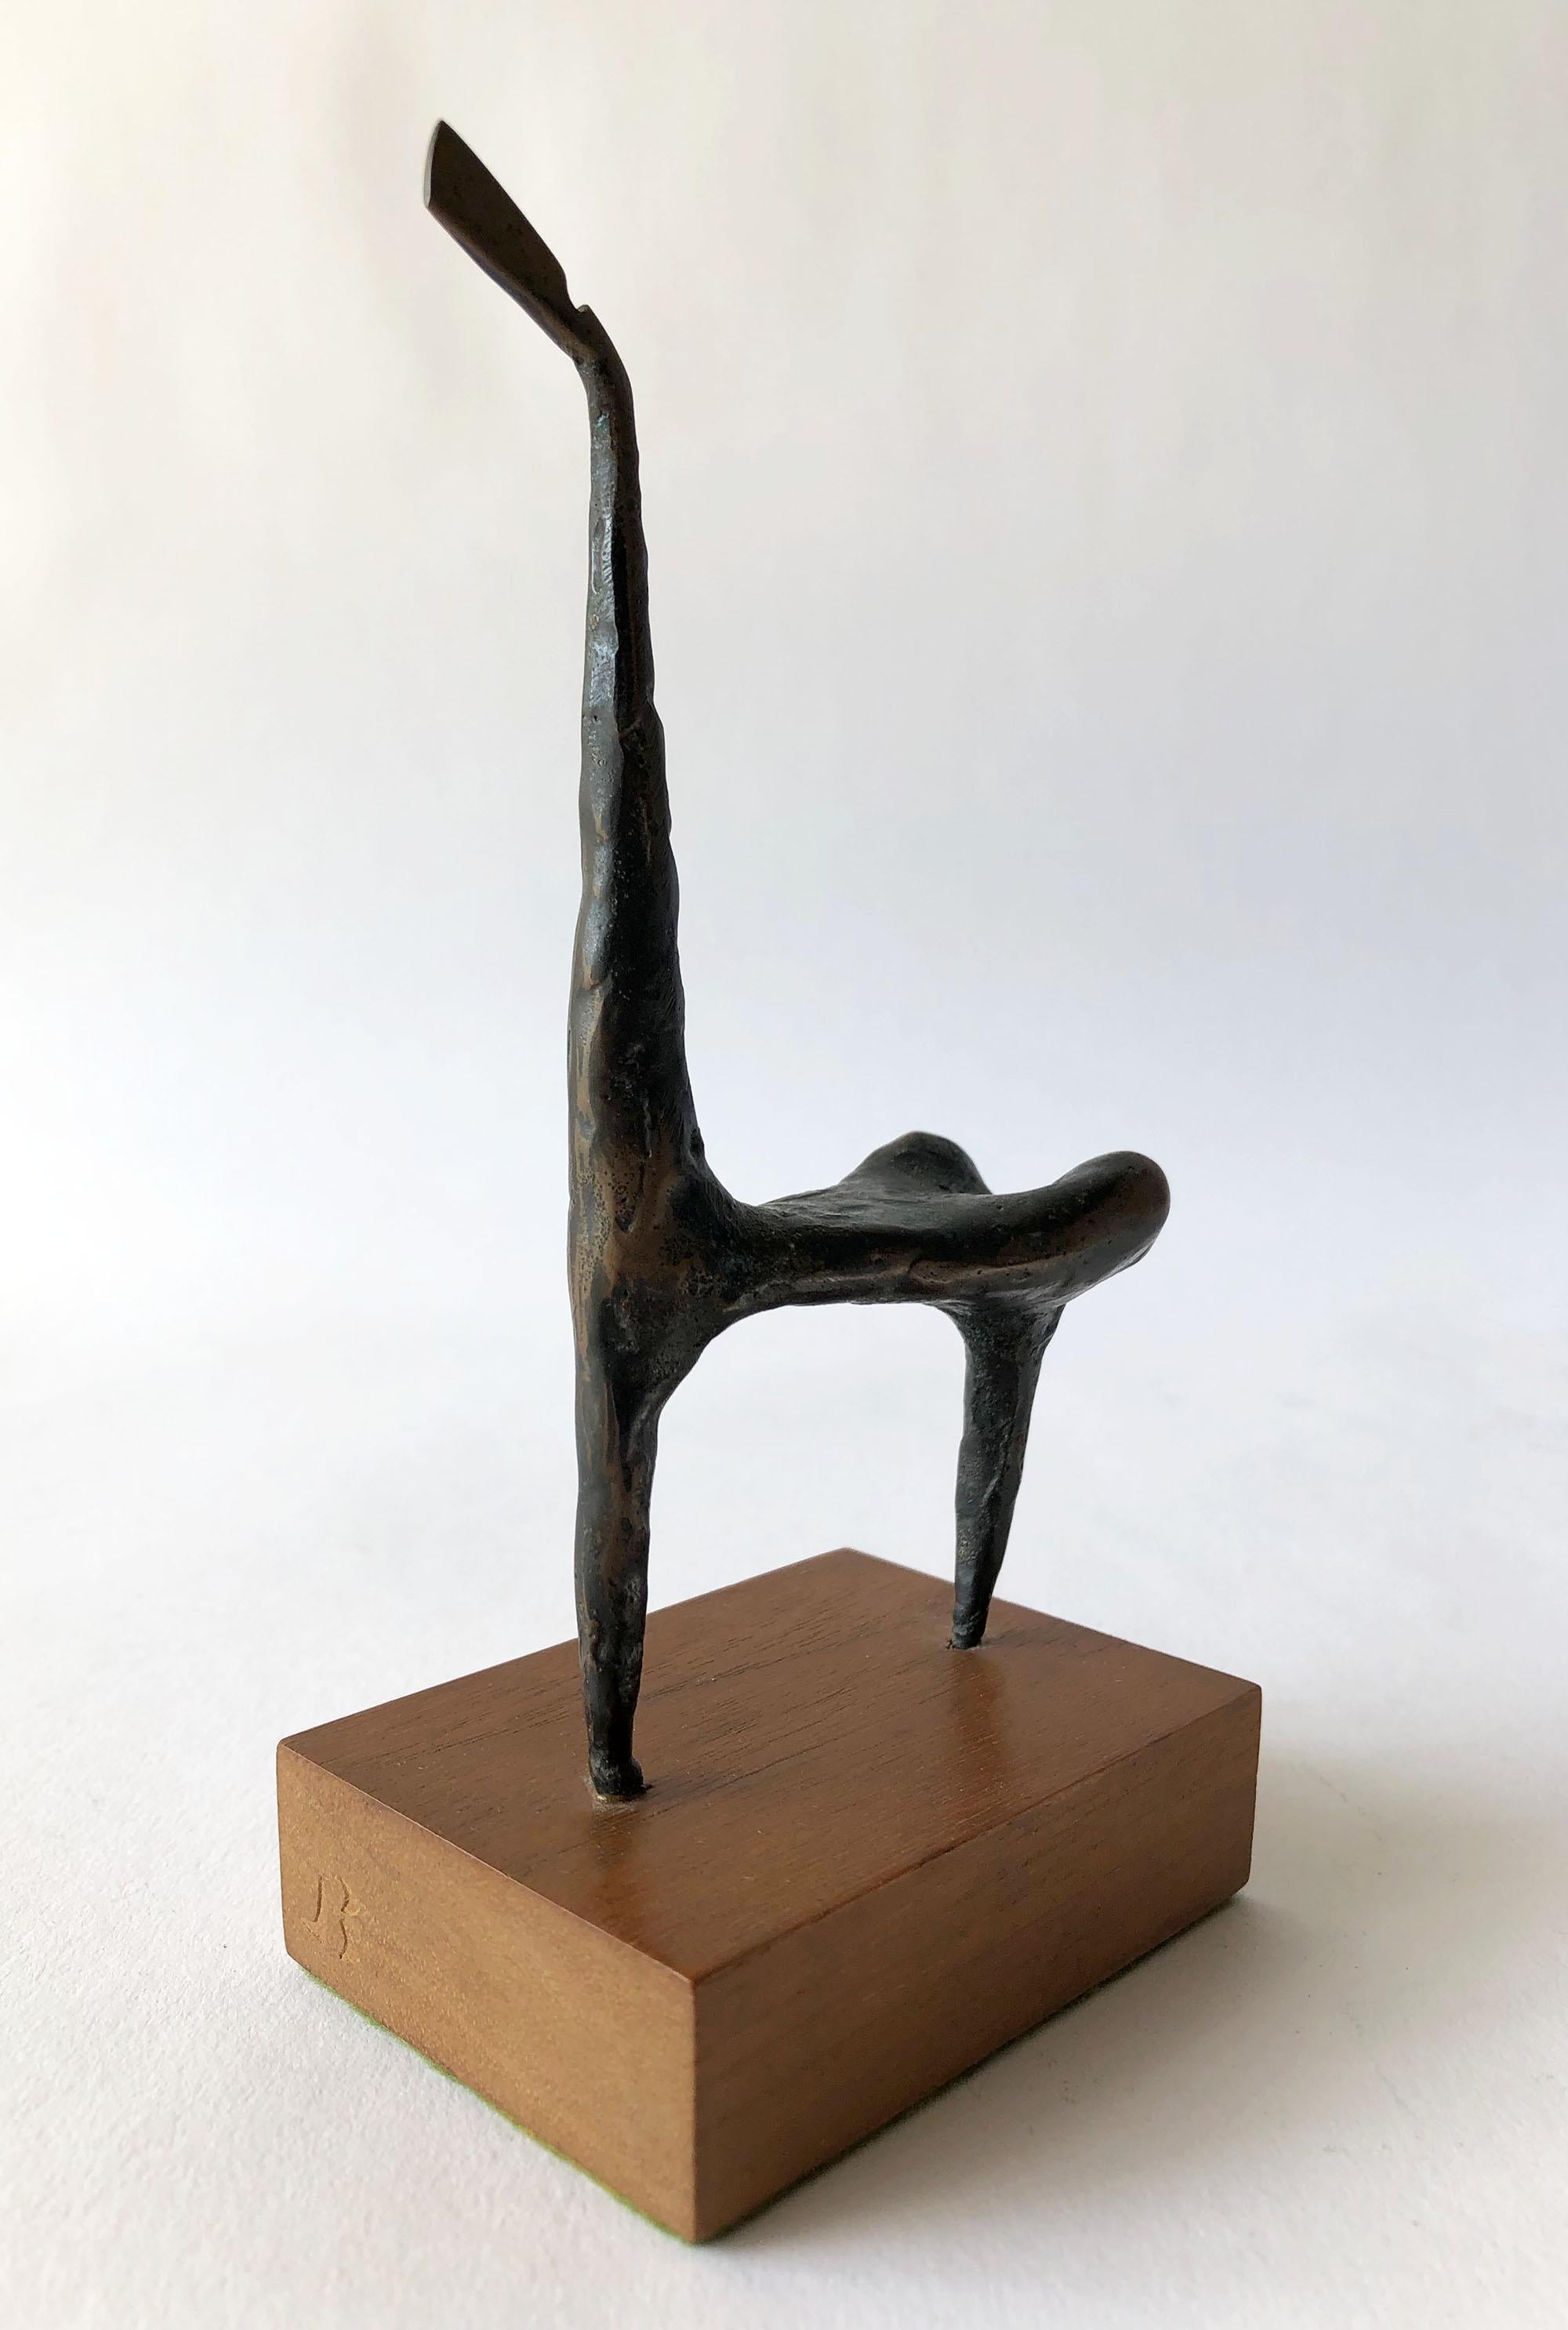 Bronze modernist giraffe sculpture created by Jack Boyd of San Diego, California. Sculpture measures 6